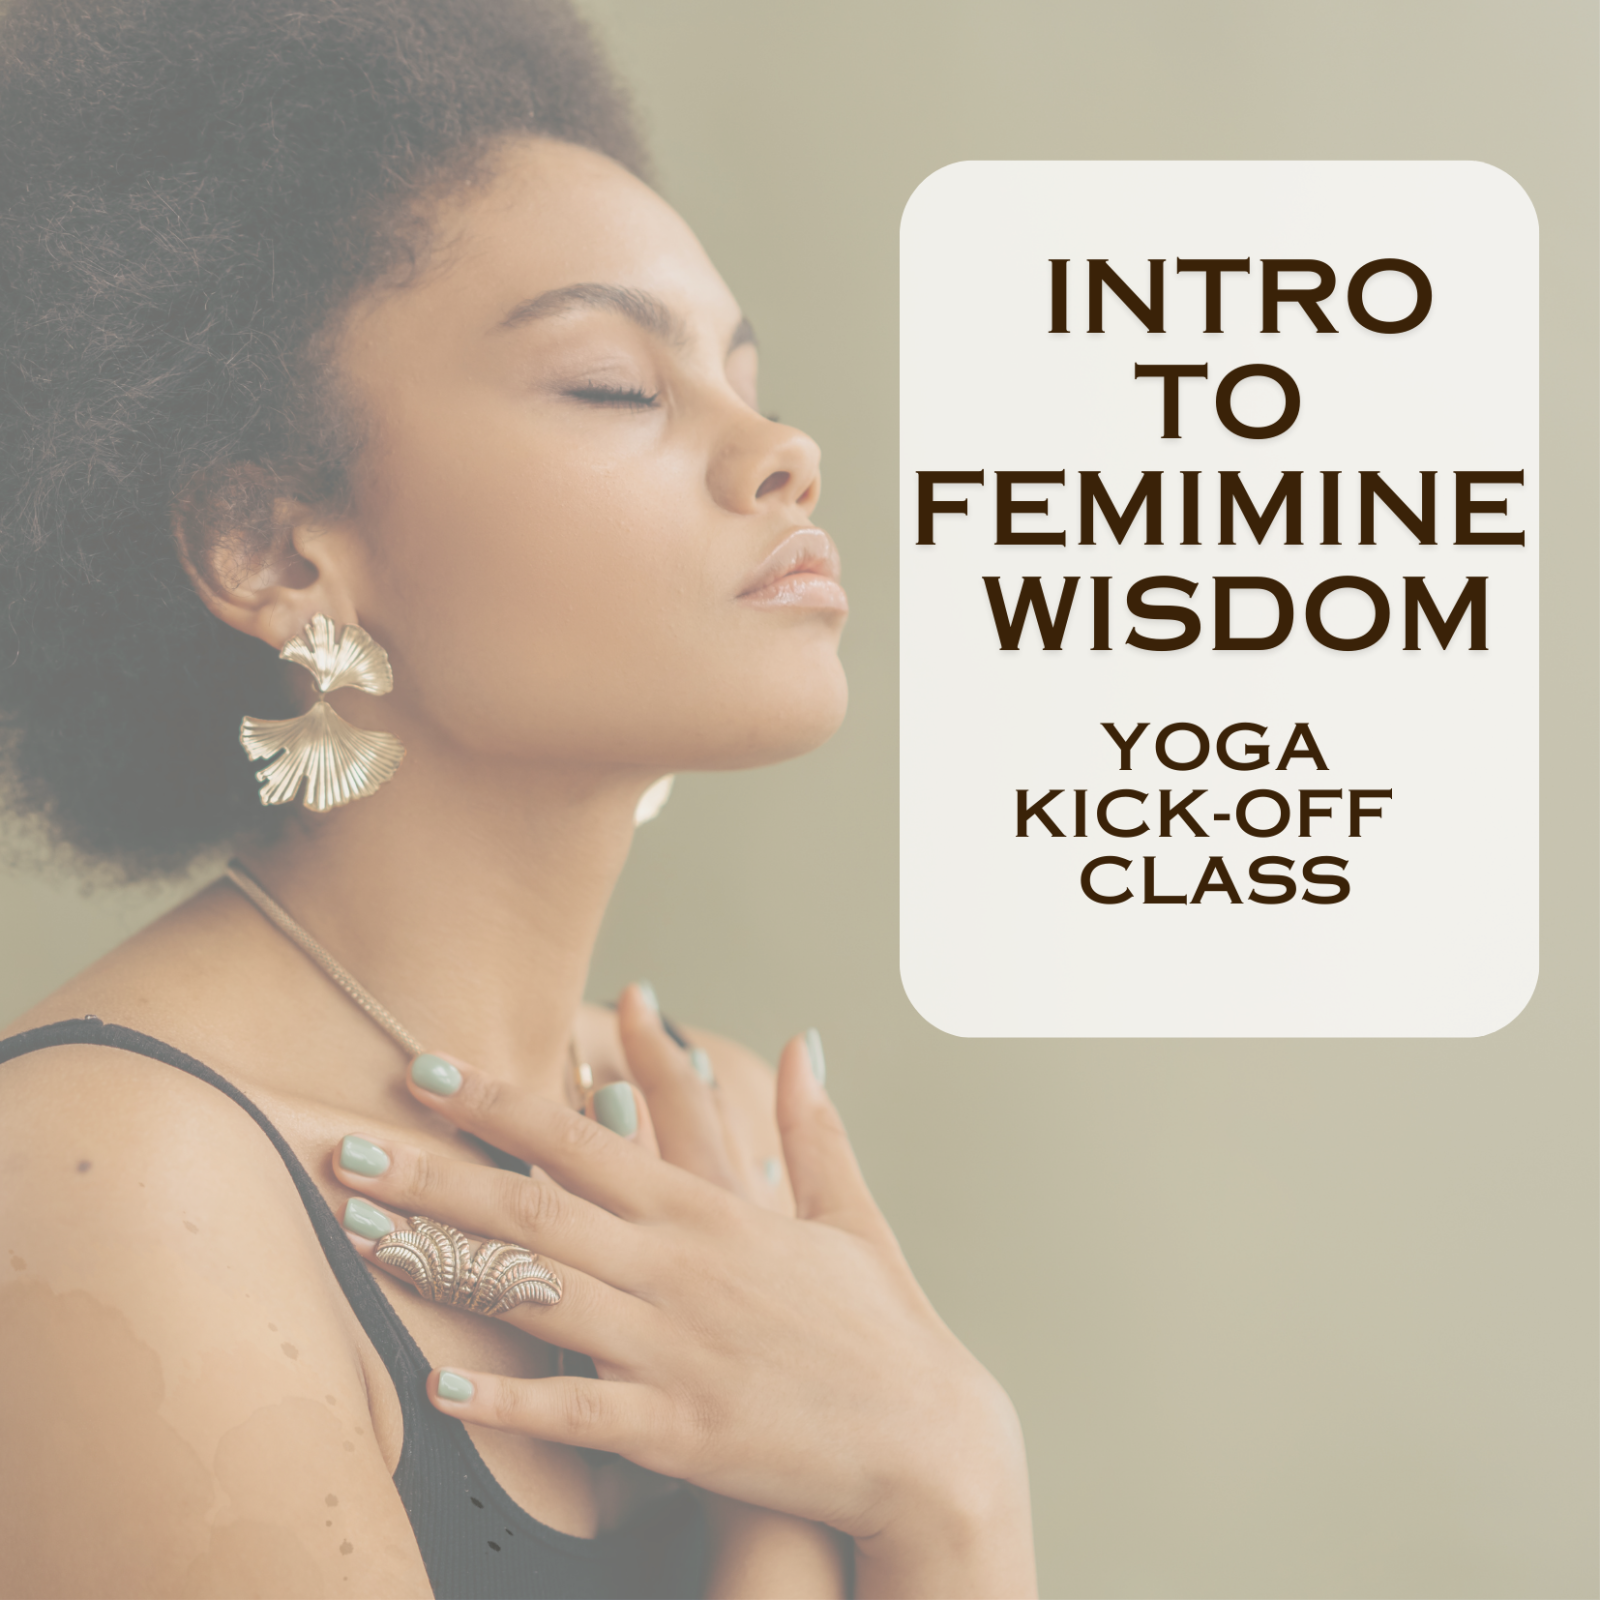 Yoga & Intro to Feminine Wisdom Kickoff Class